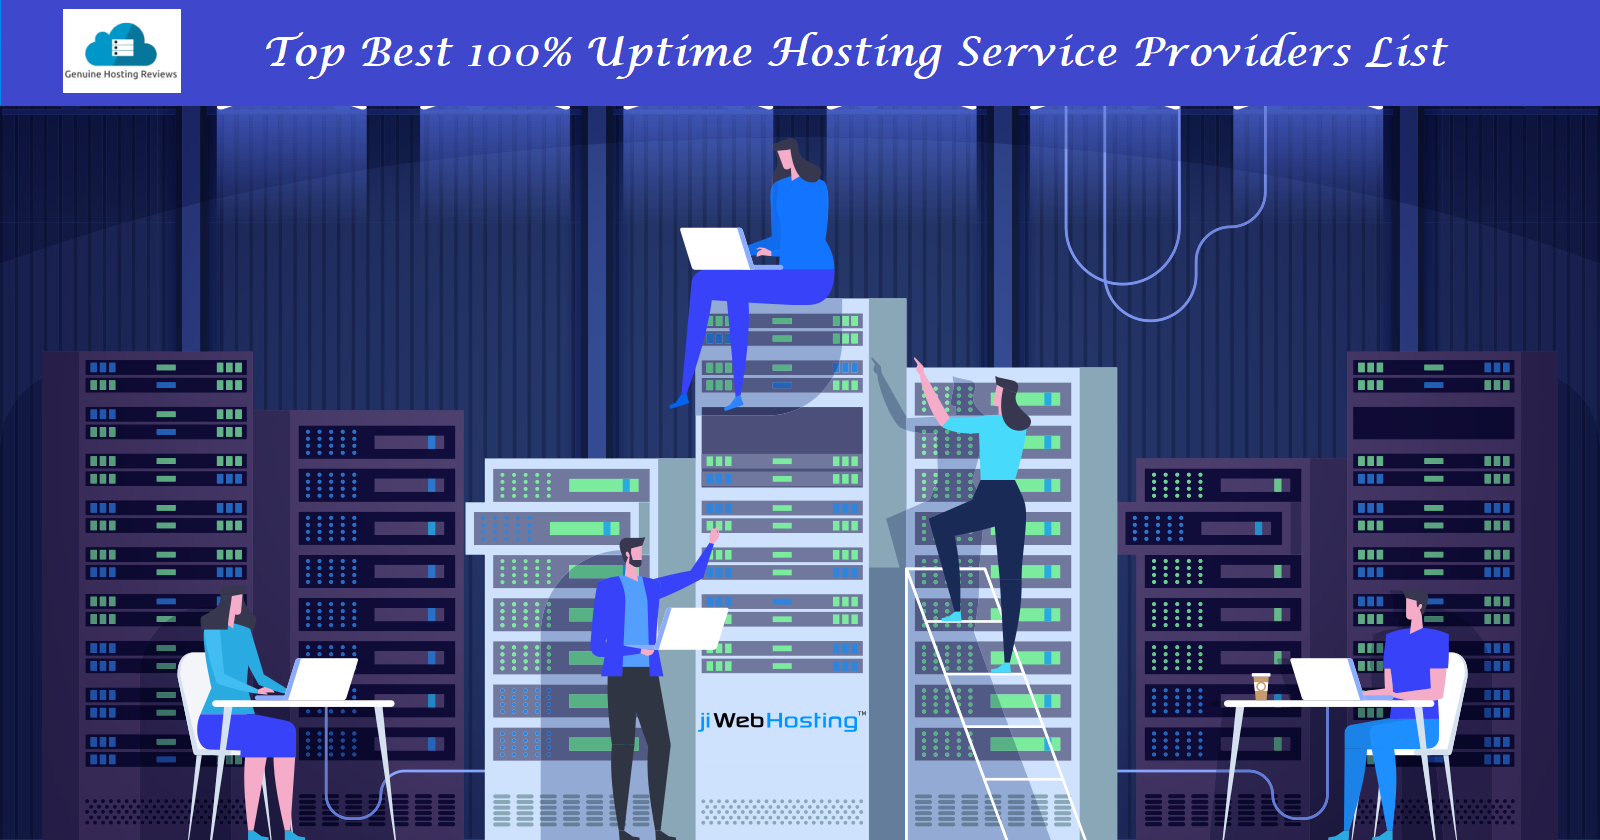 Top Best 100% Uptime Hosting Service Providers List